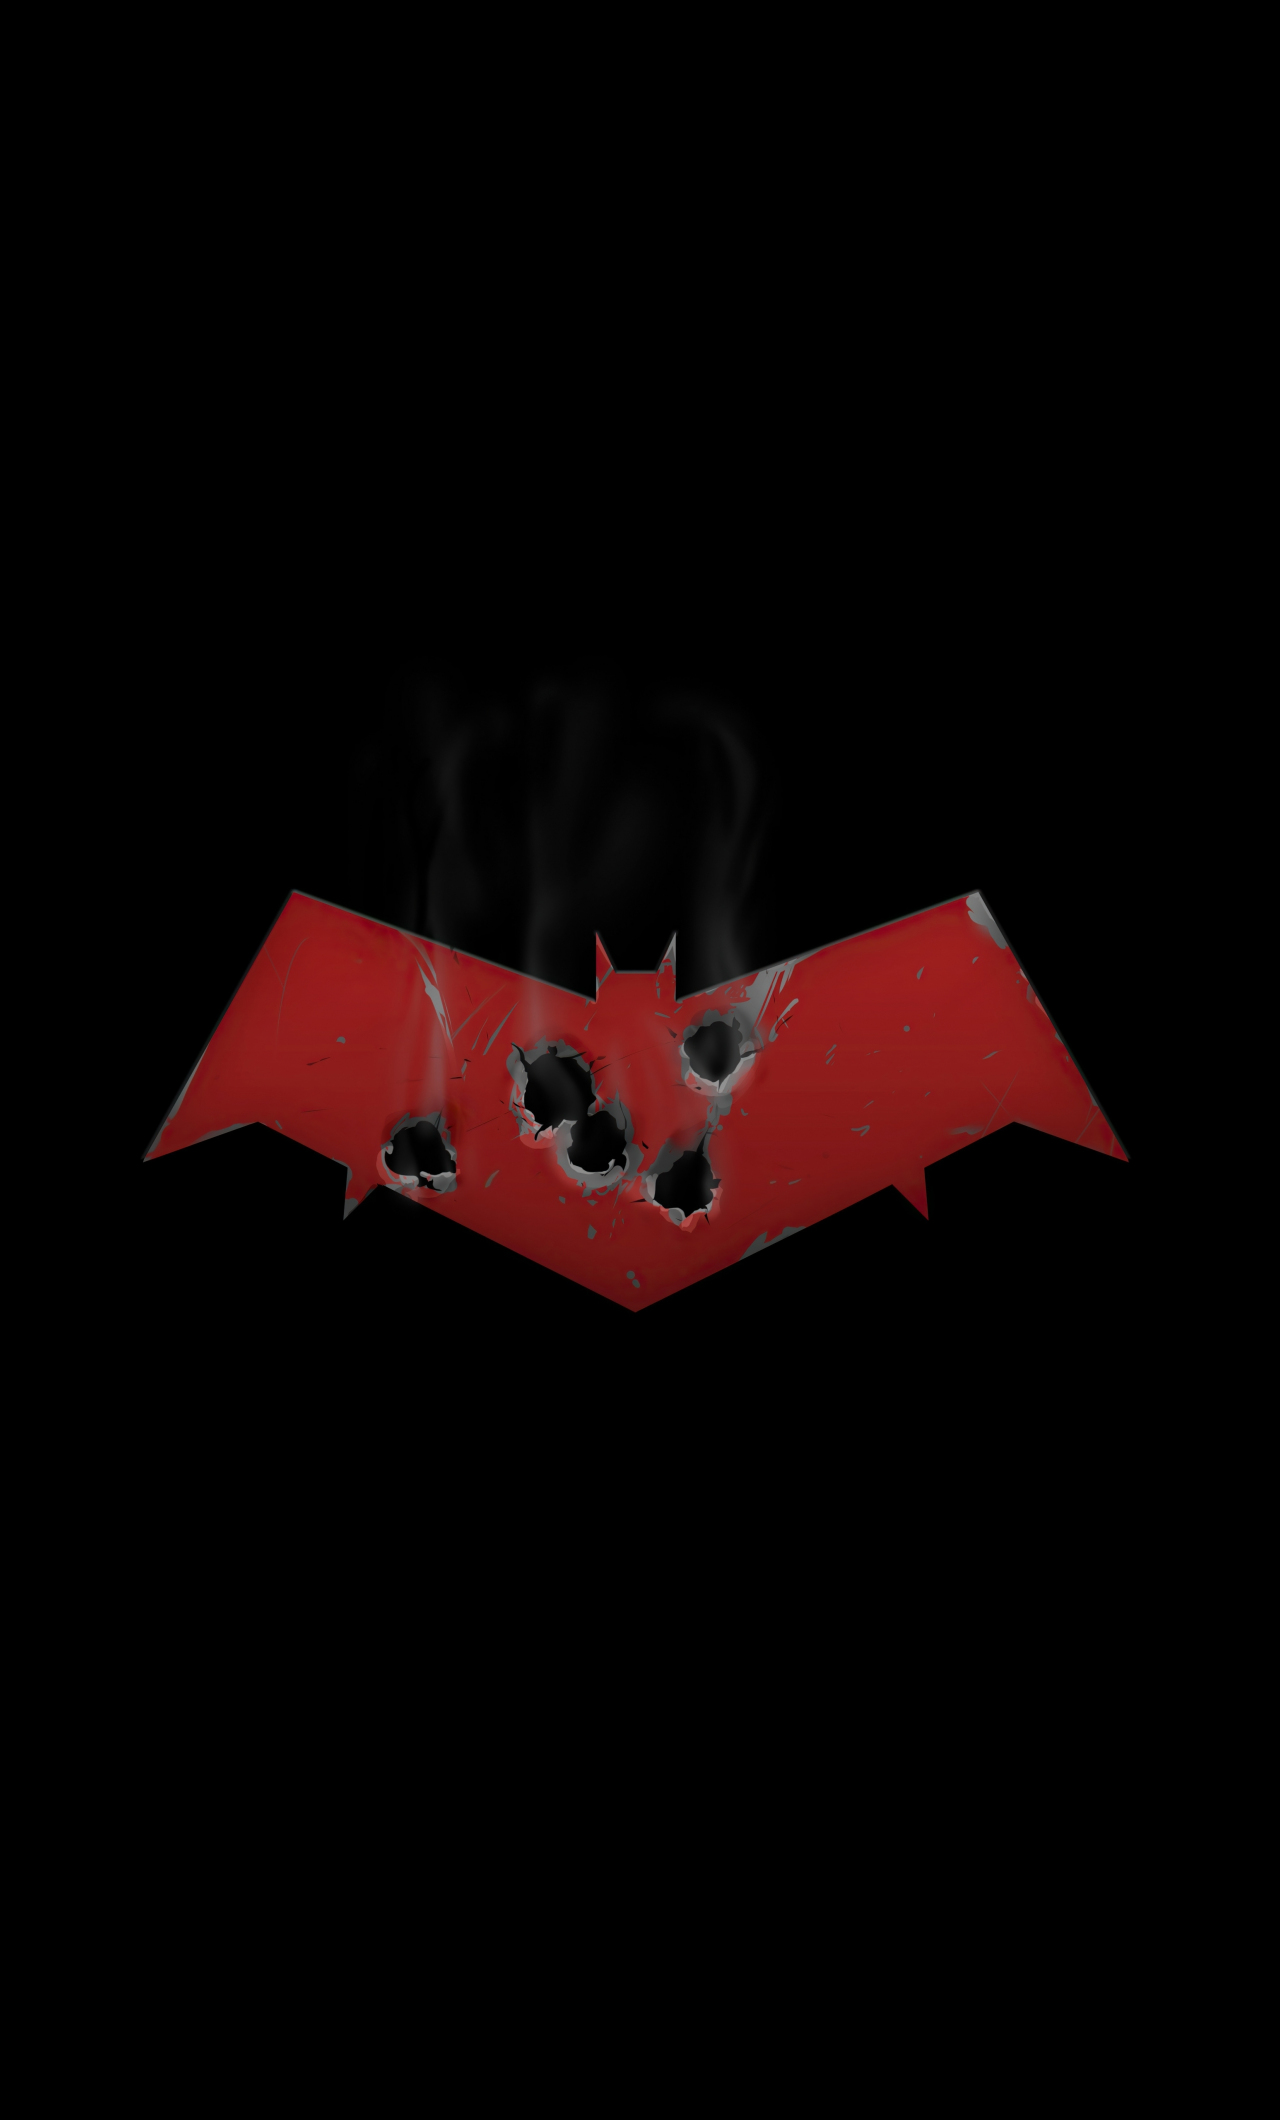 Download wallpaper 1280x2120 red hood vs grifter: blood money, batman, logo,  iphone 6 plus, 1280x2120 hd background, 26998